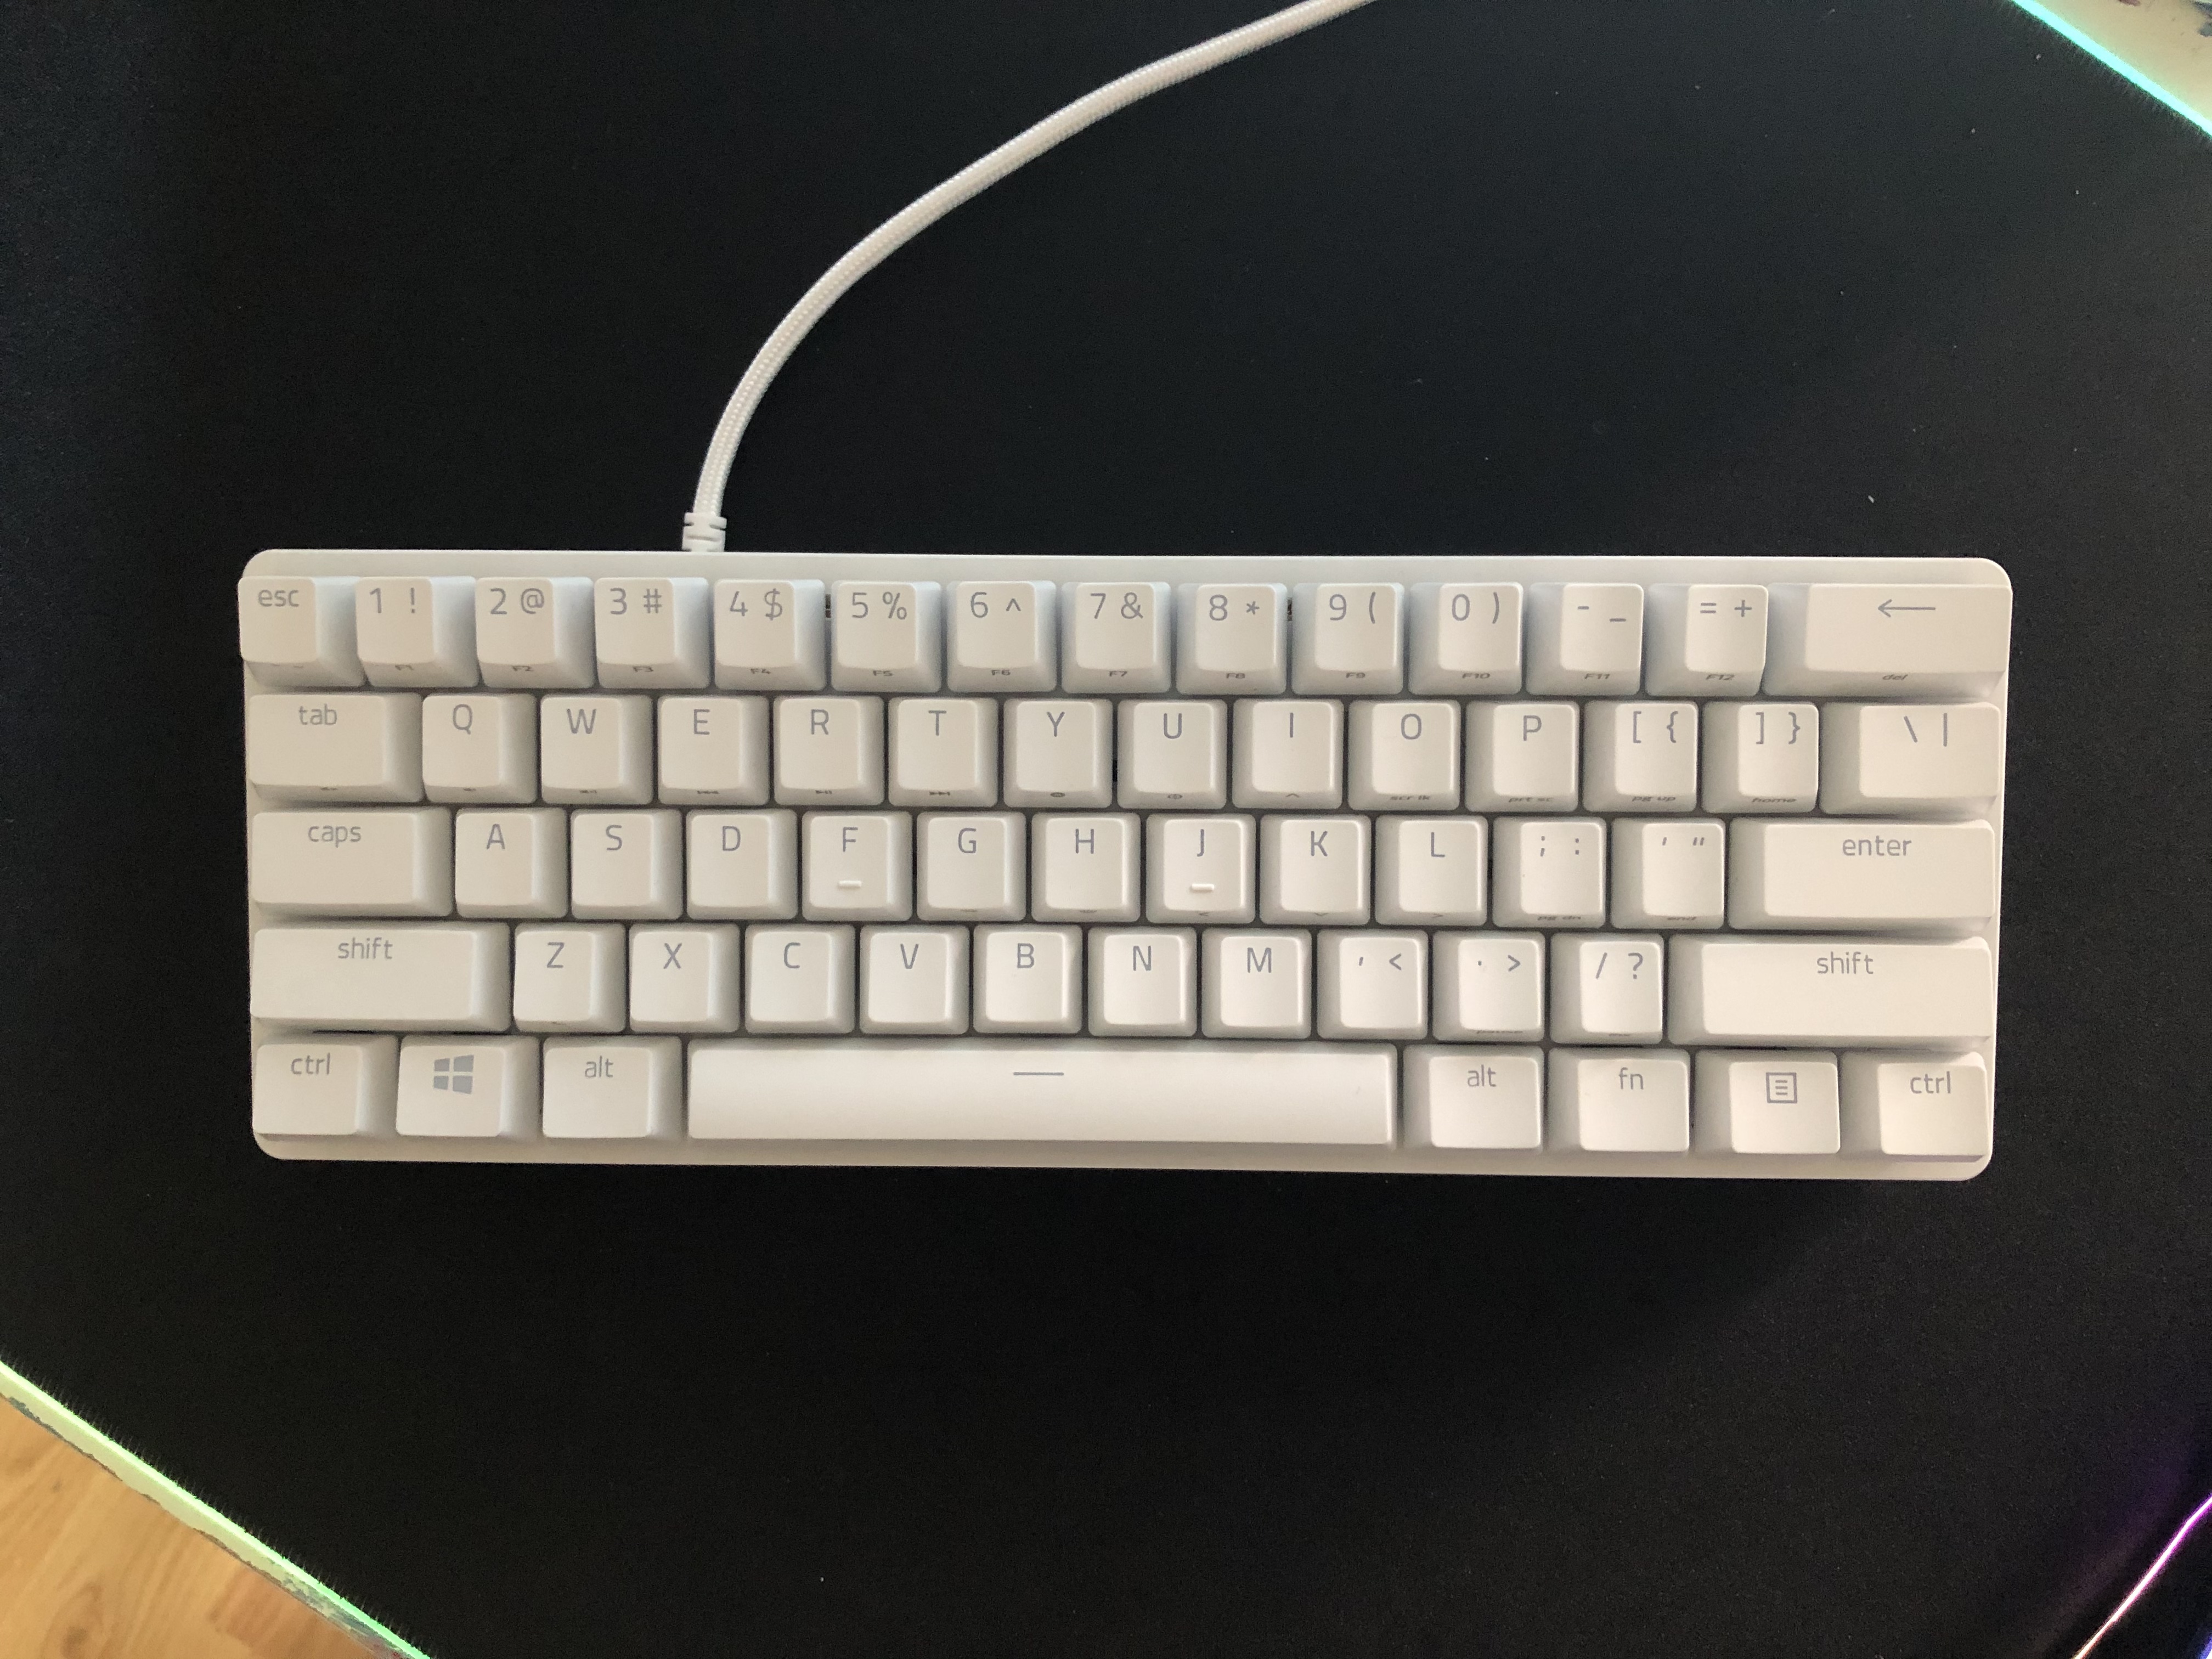 how to change colors on razer keyboard